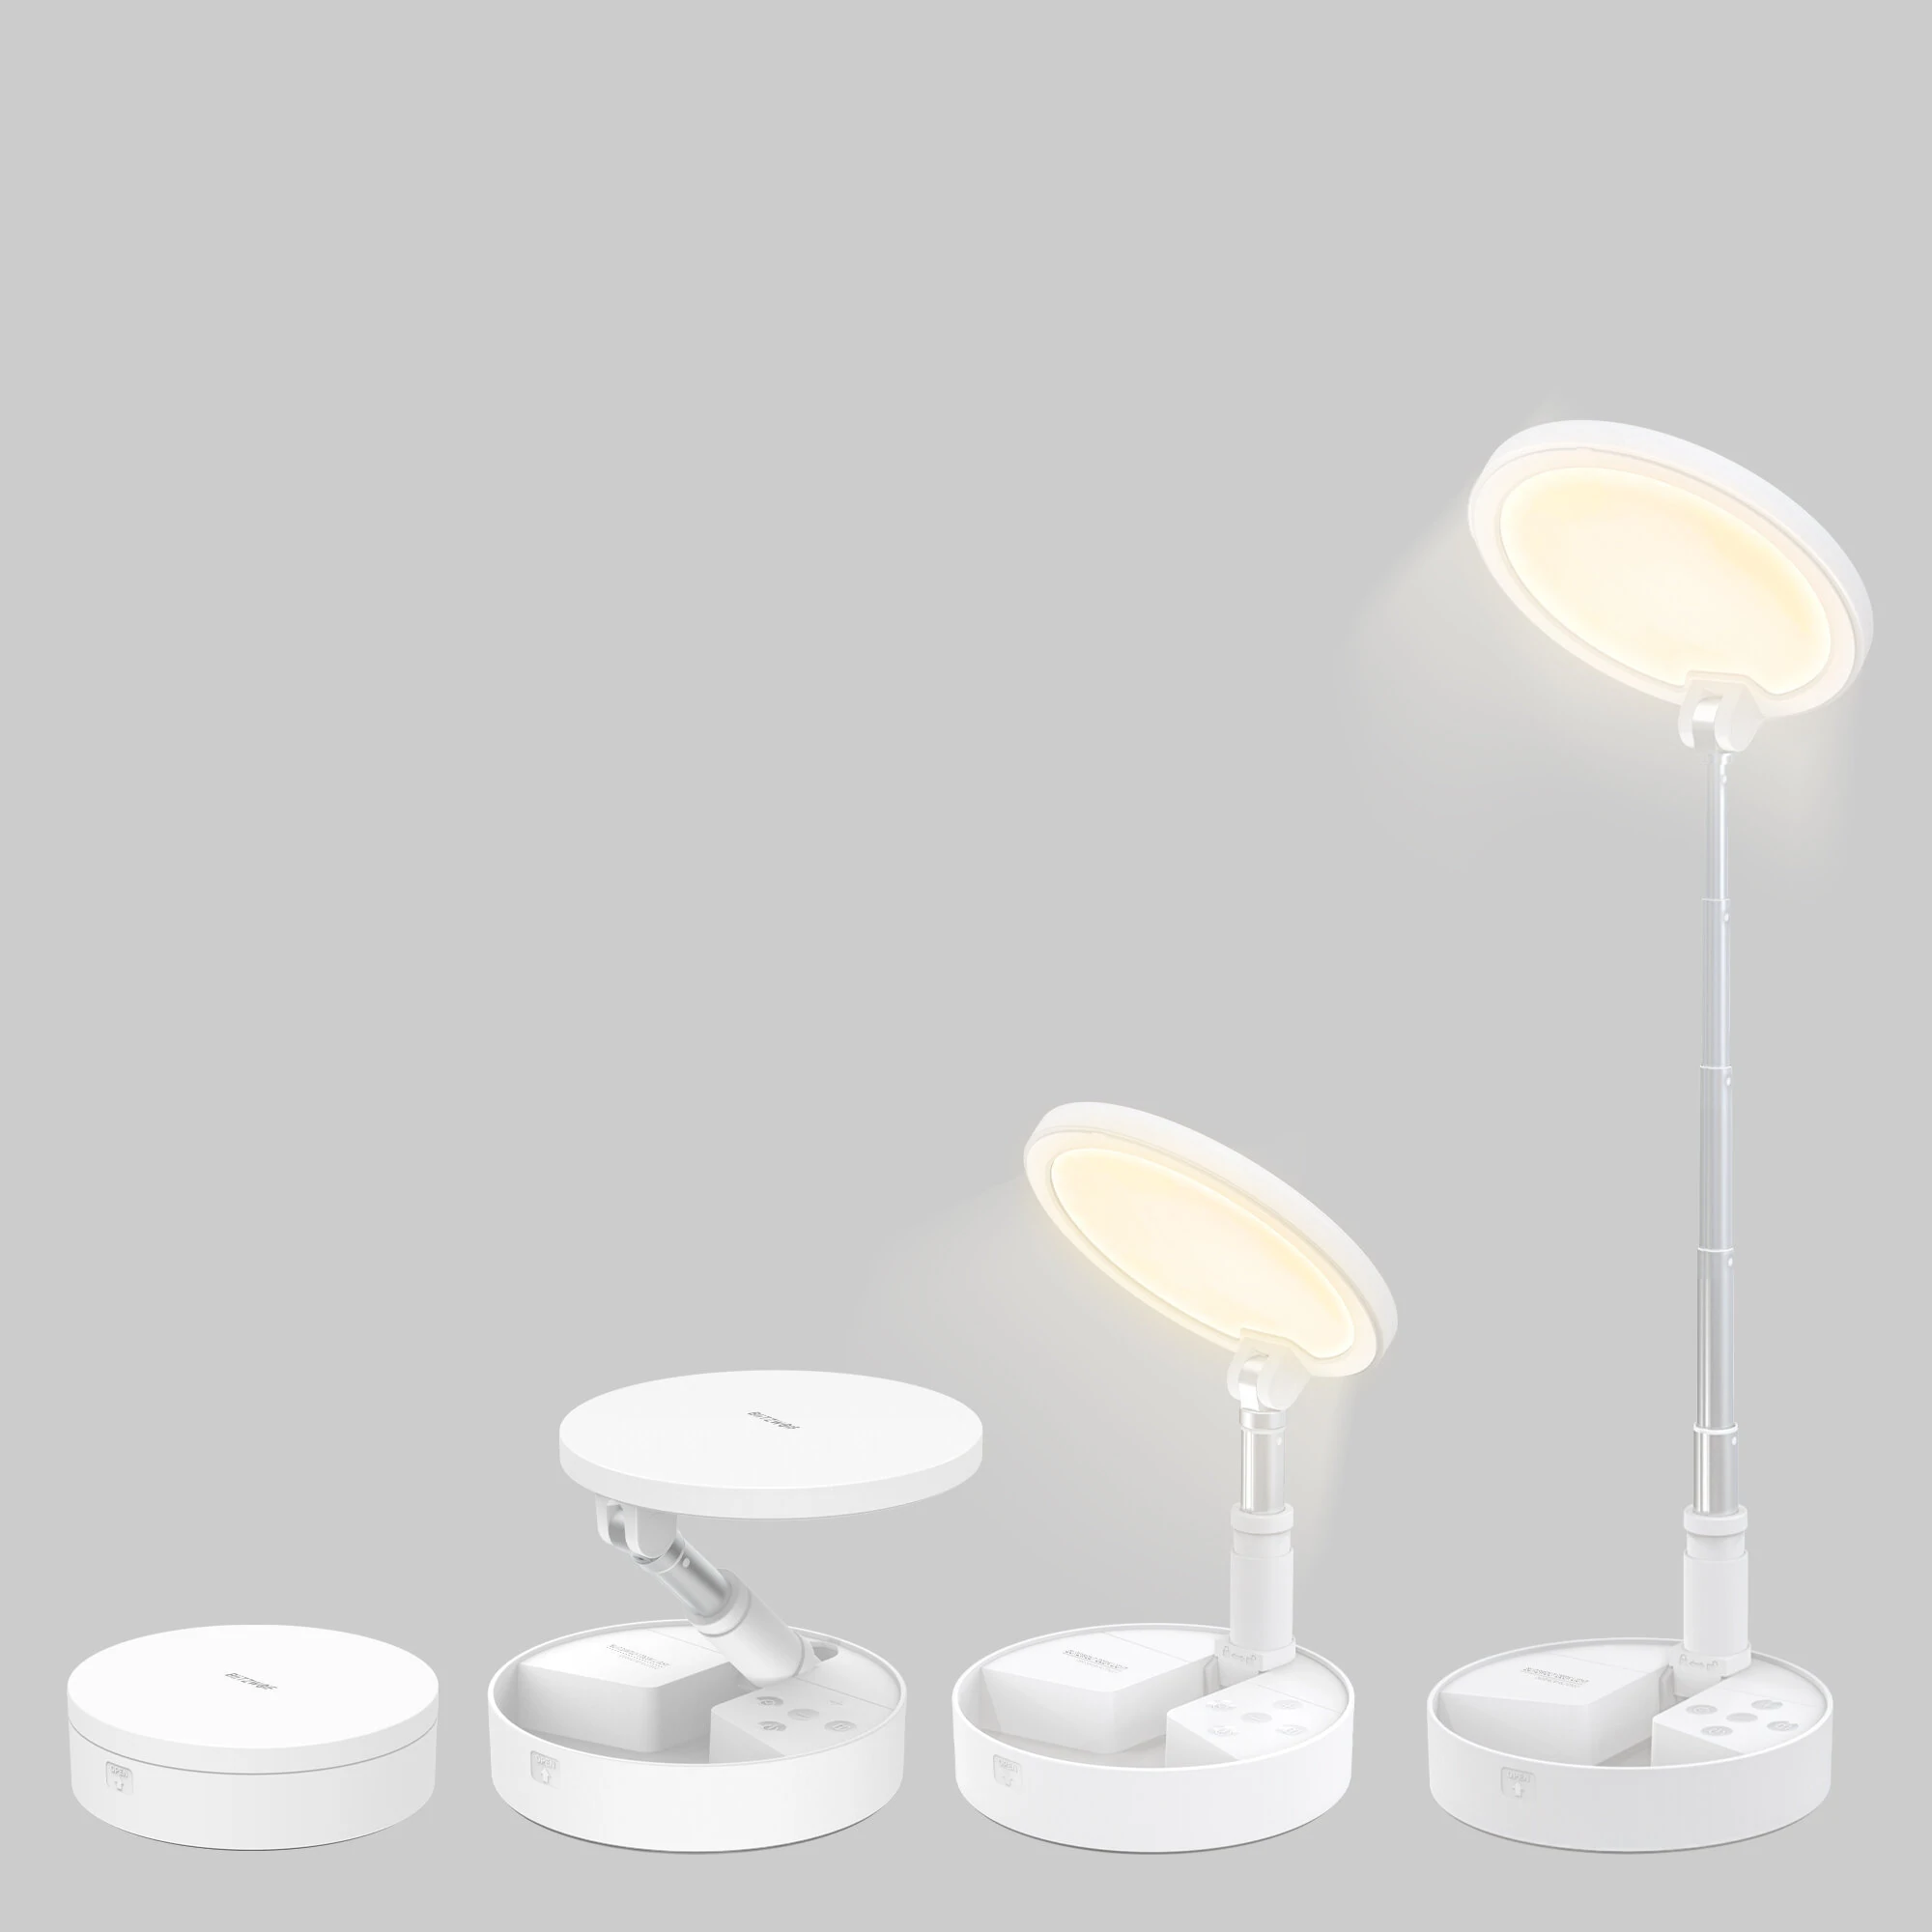 BlitzWolfÂ® BW-DLT1 Folding Desk Lamp with Foldable Storage Adjustable Angle 3600mAh Battery 5 Level Brightness 3000-5000K Color Temp - White